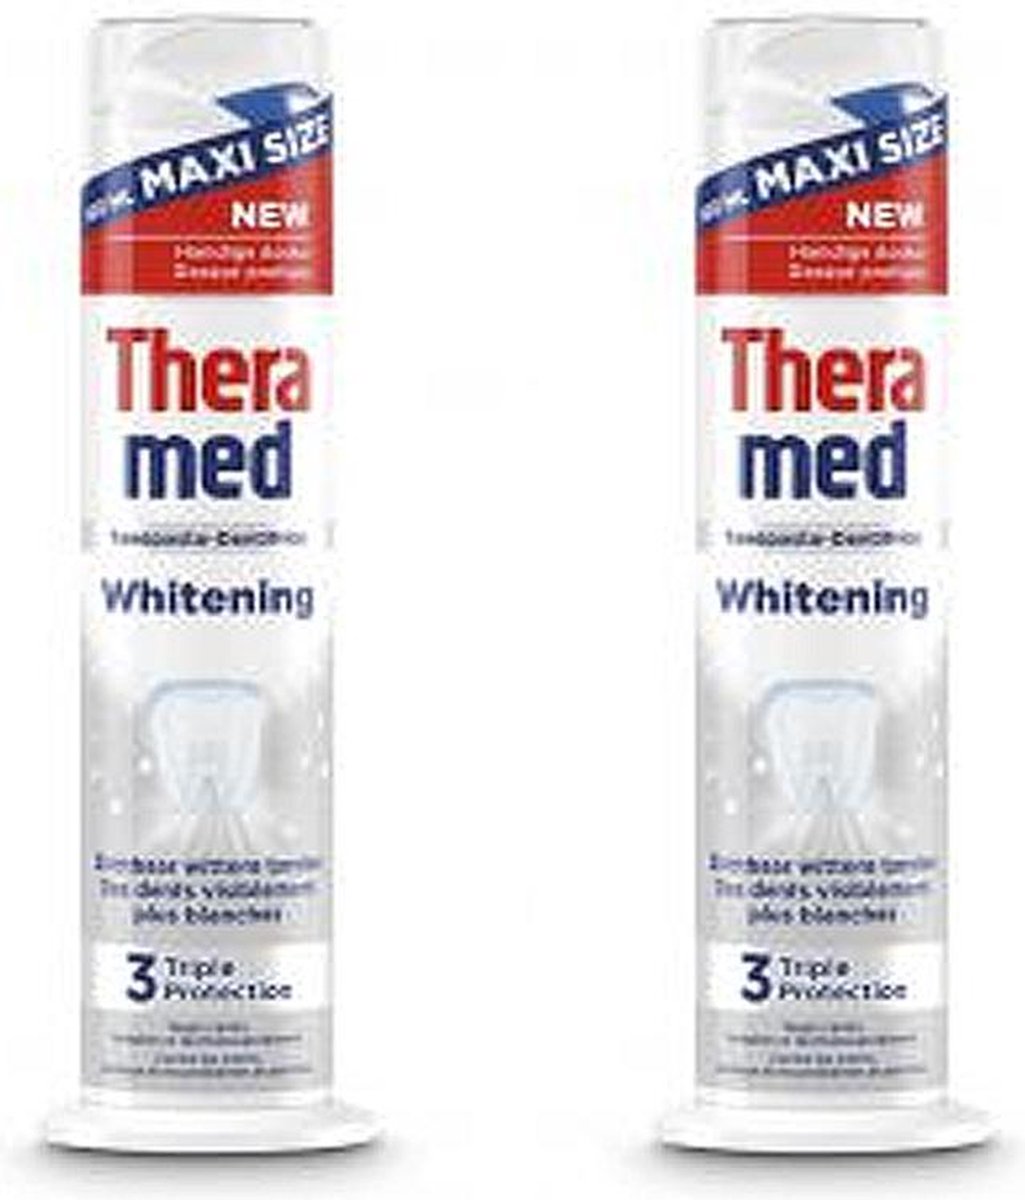 Theramed Tandpasta Whitening 3 Triple Protection Voordeelbox 2 x 100 ml